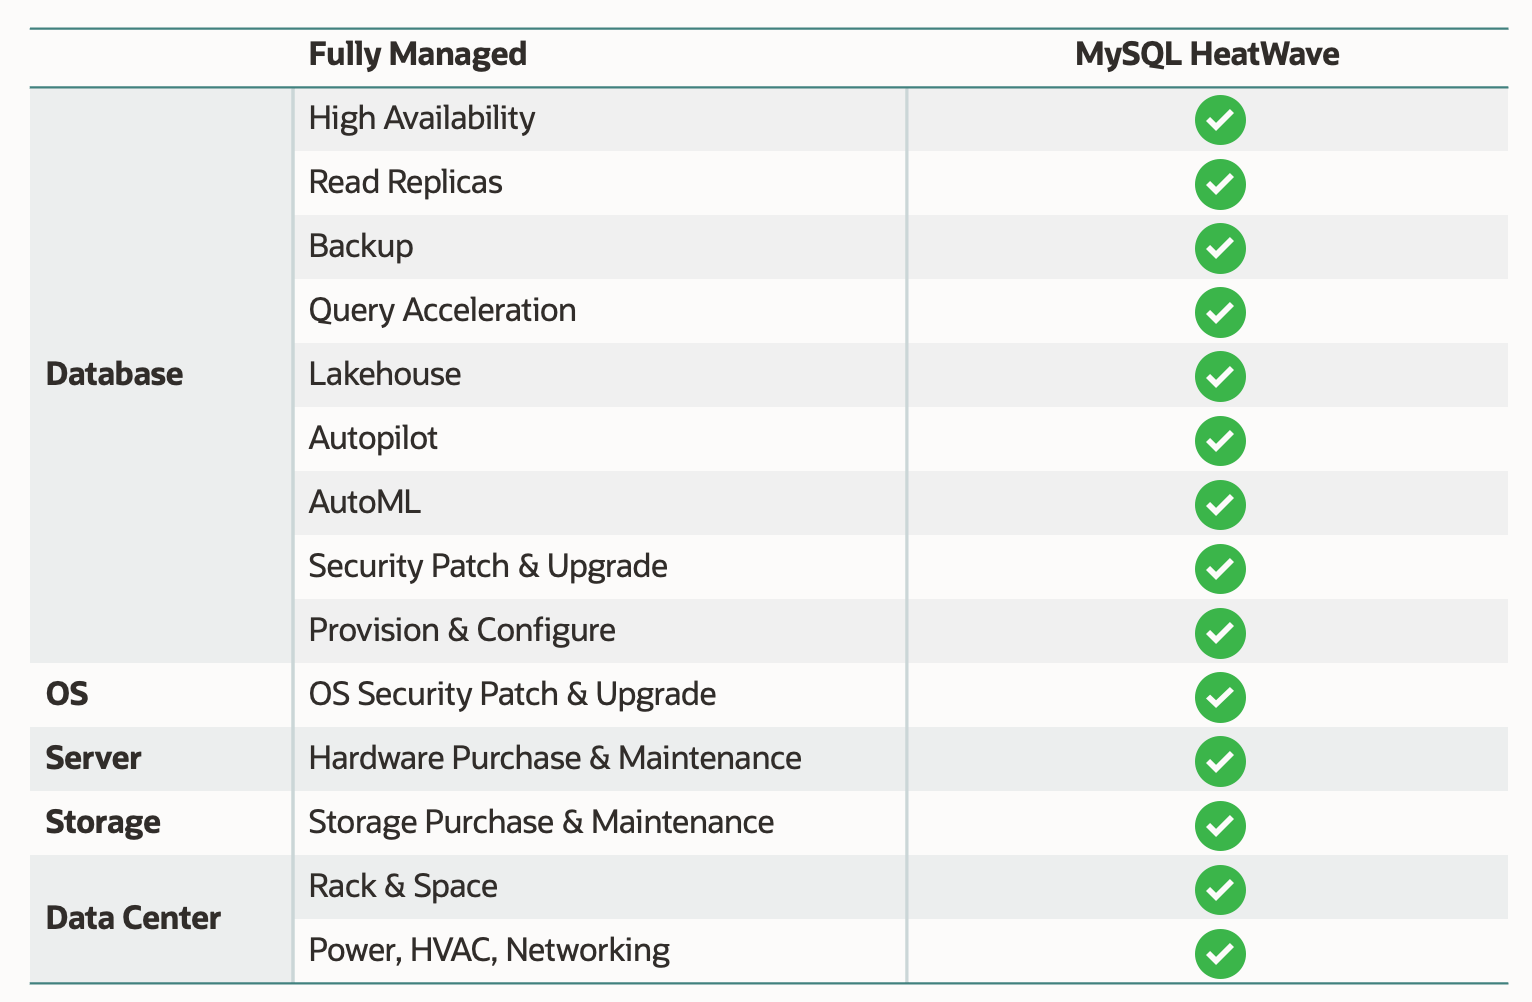 MySQL HeatWave: Fully Managed